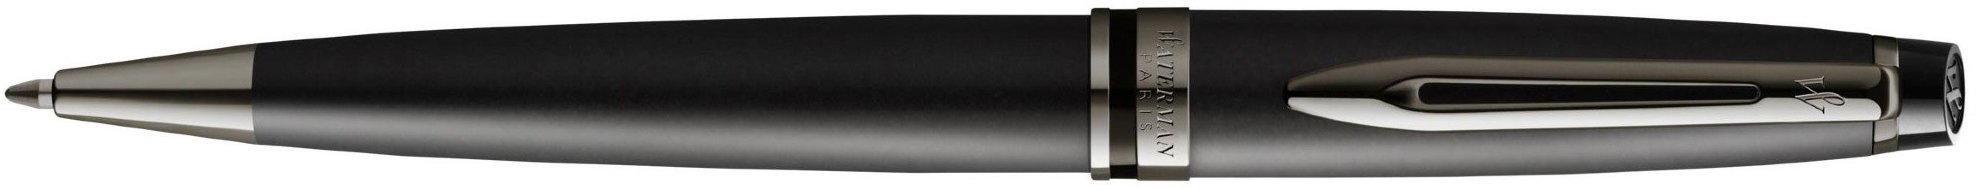 Ручка шариковая Waterman Expert DeLuxe Metallic Black RT M синие чернила